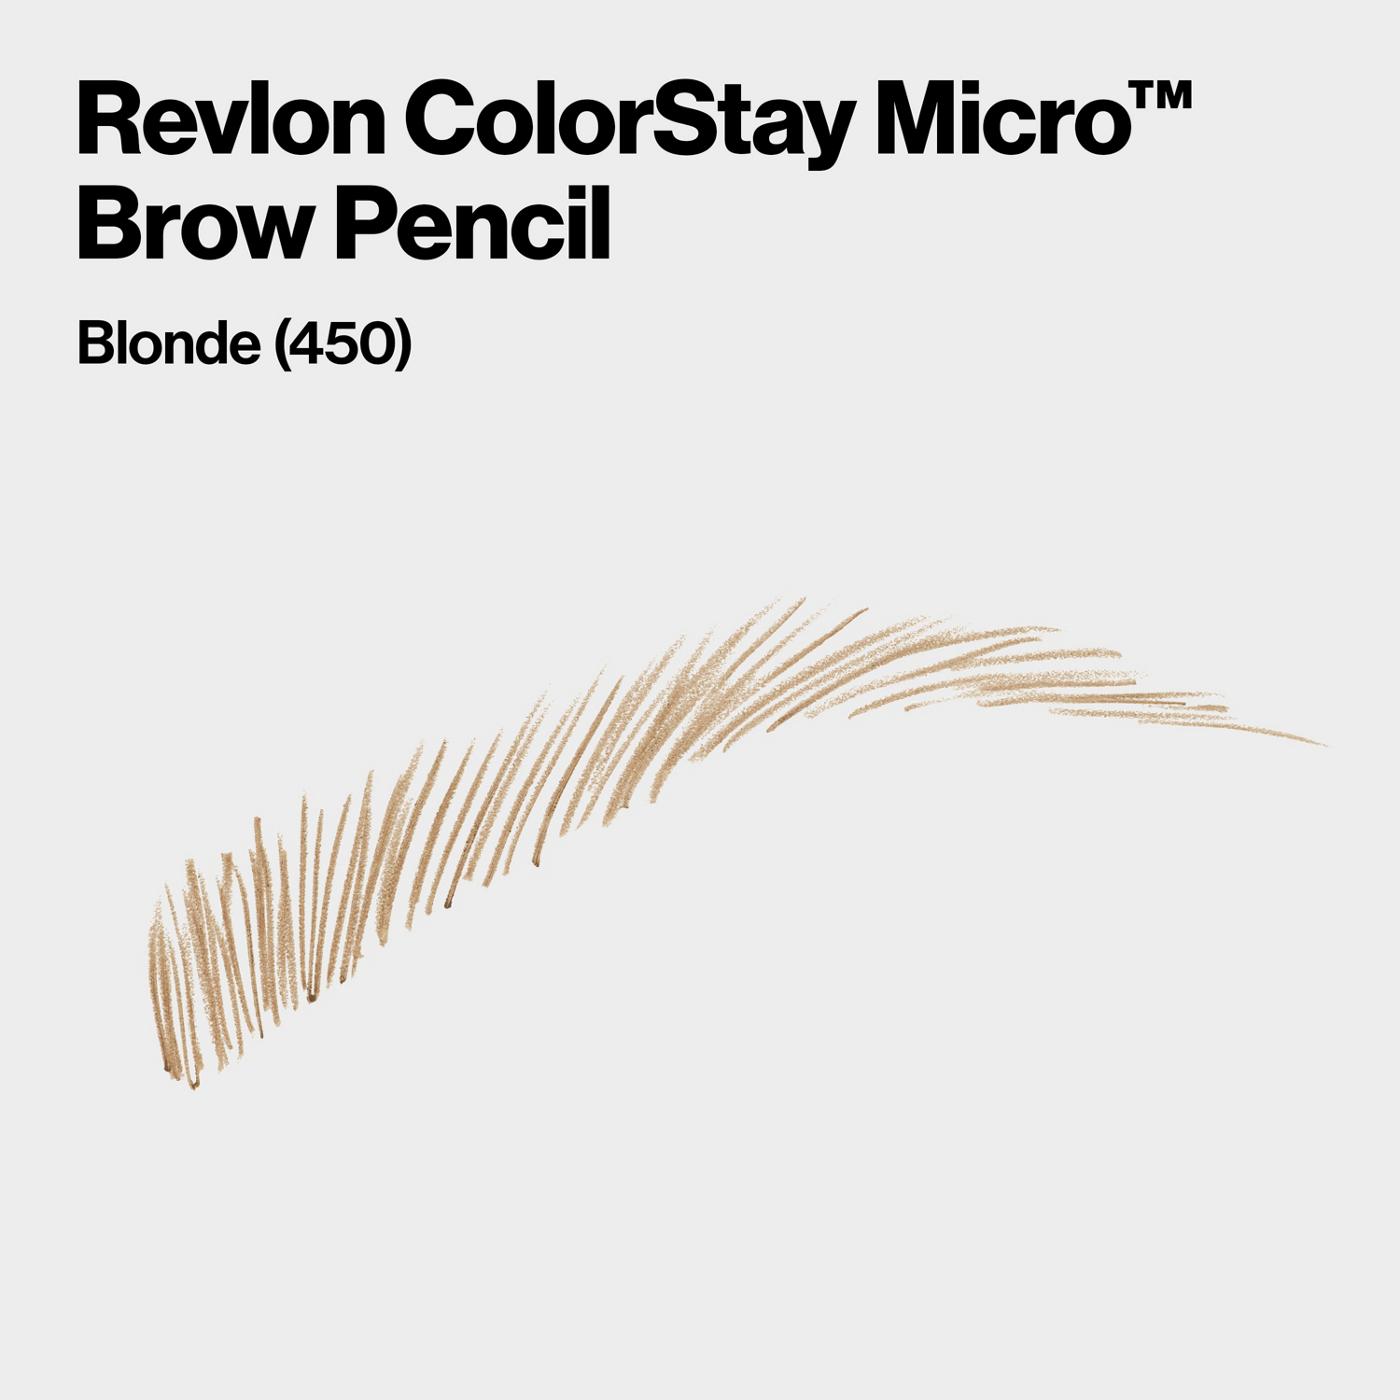 Revlon ColorStay Micro Brow Pencil - Blonde; image 2 of 6